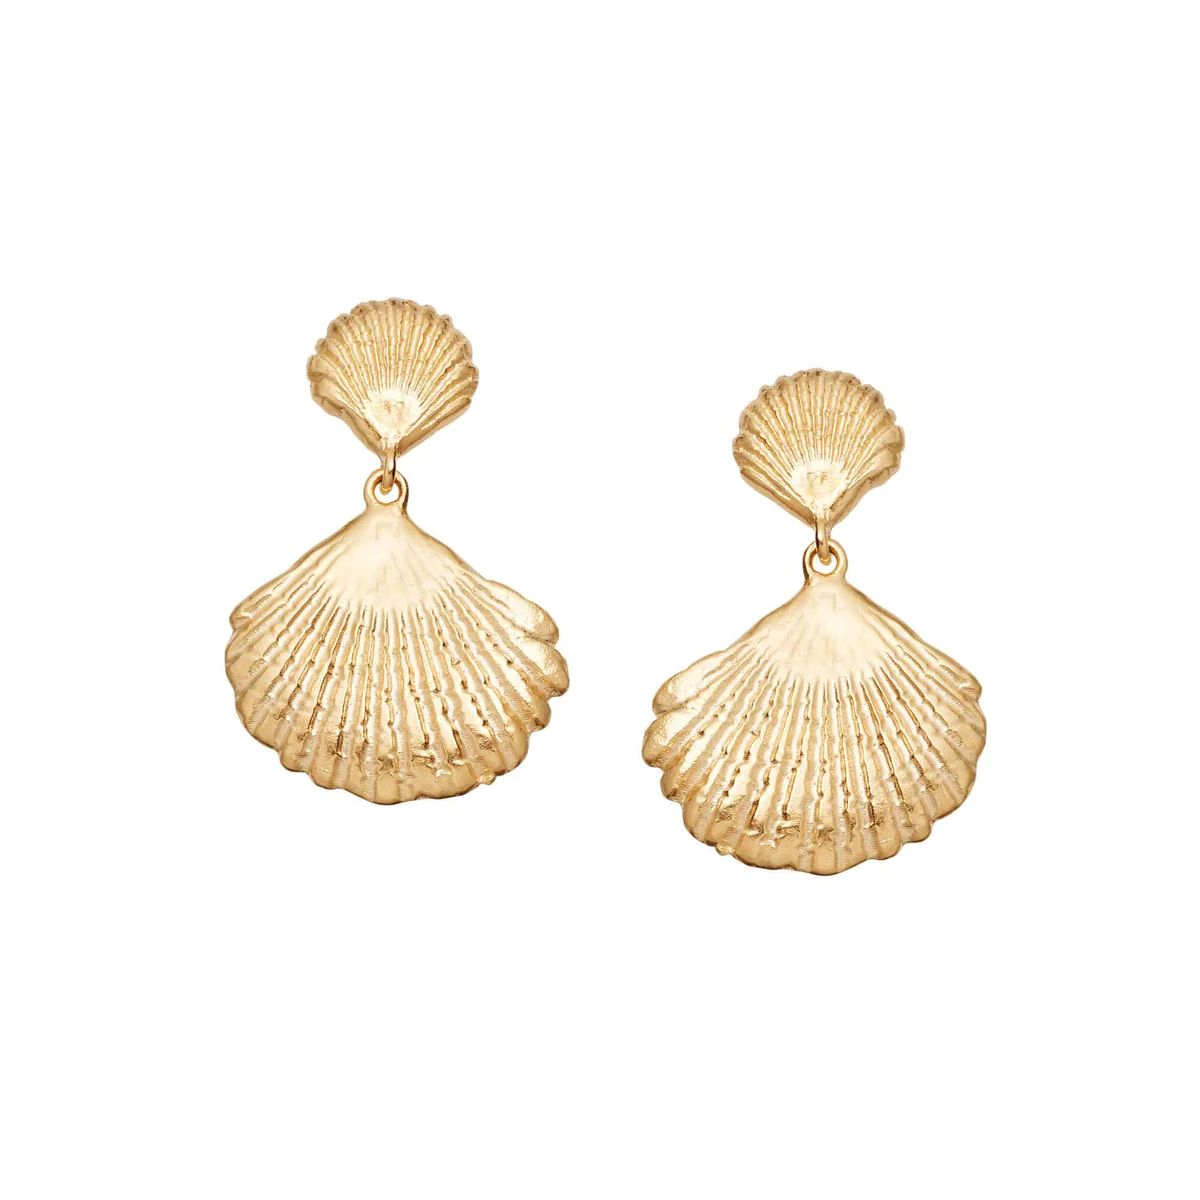 Double Shell Earrings 18ct Gold Plate | Daisy London Jewellery